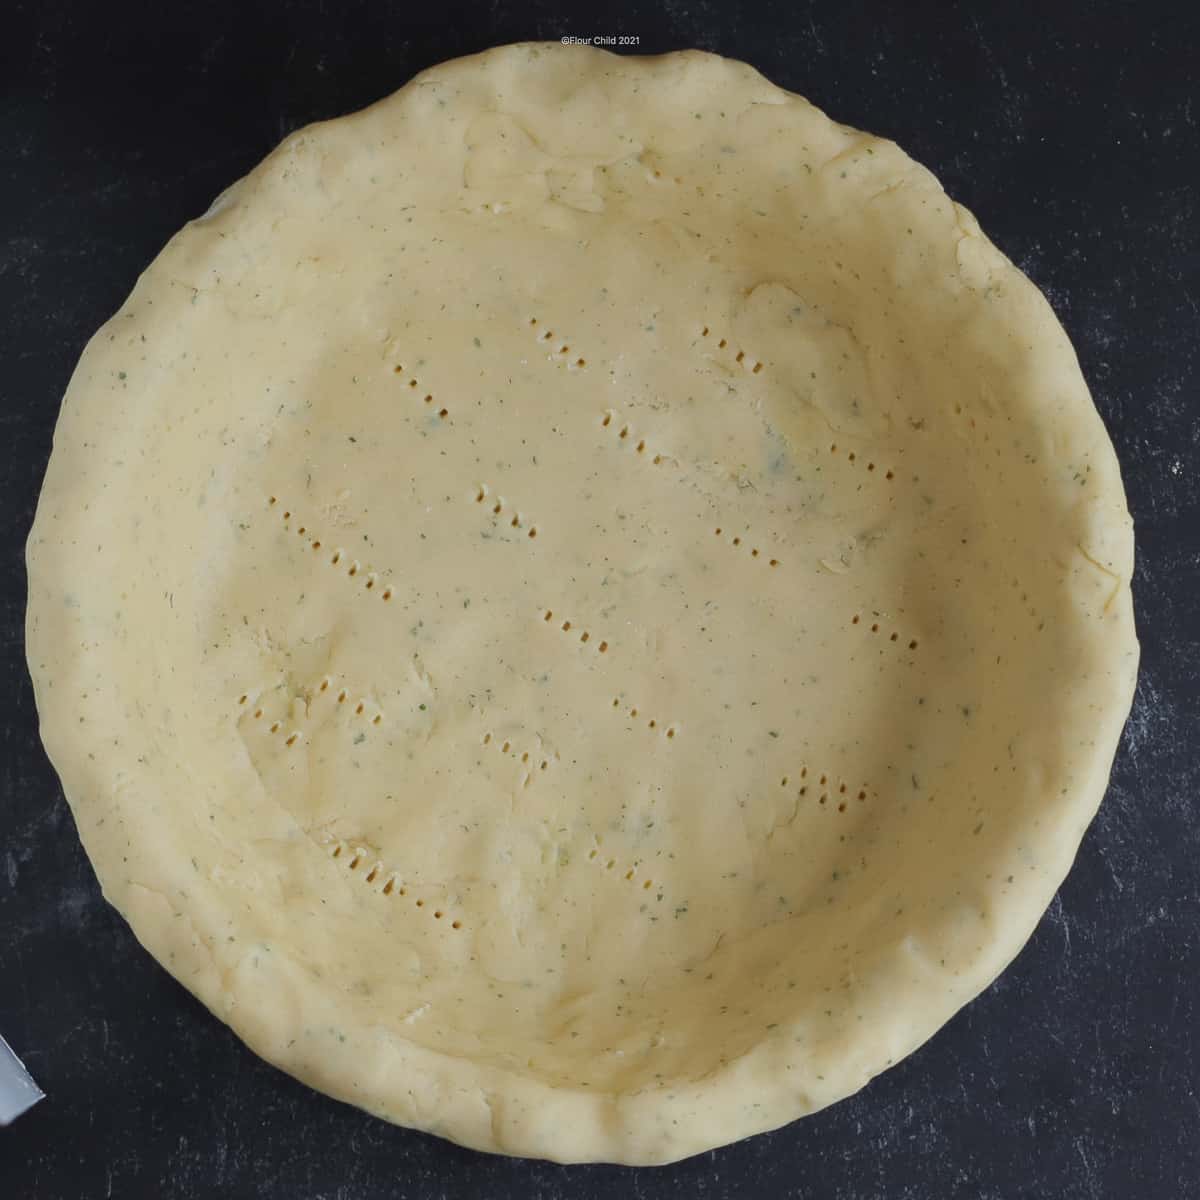 An empty quiche crust in a pie plate